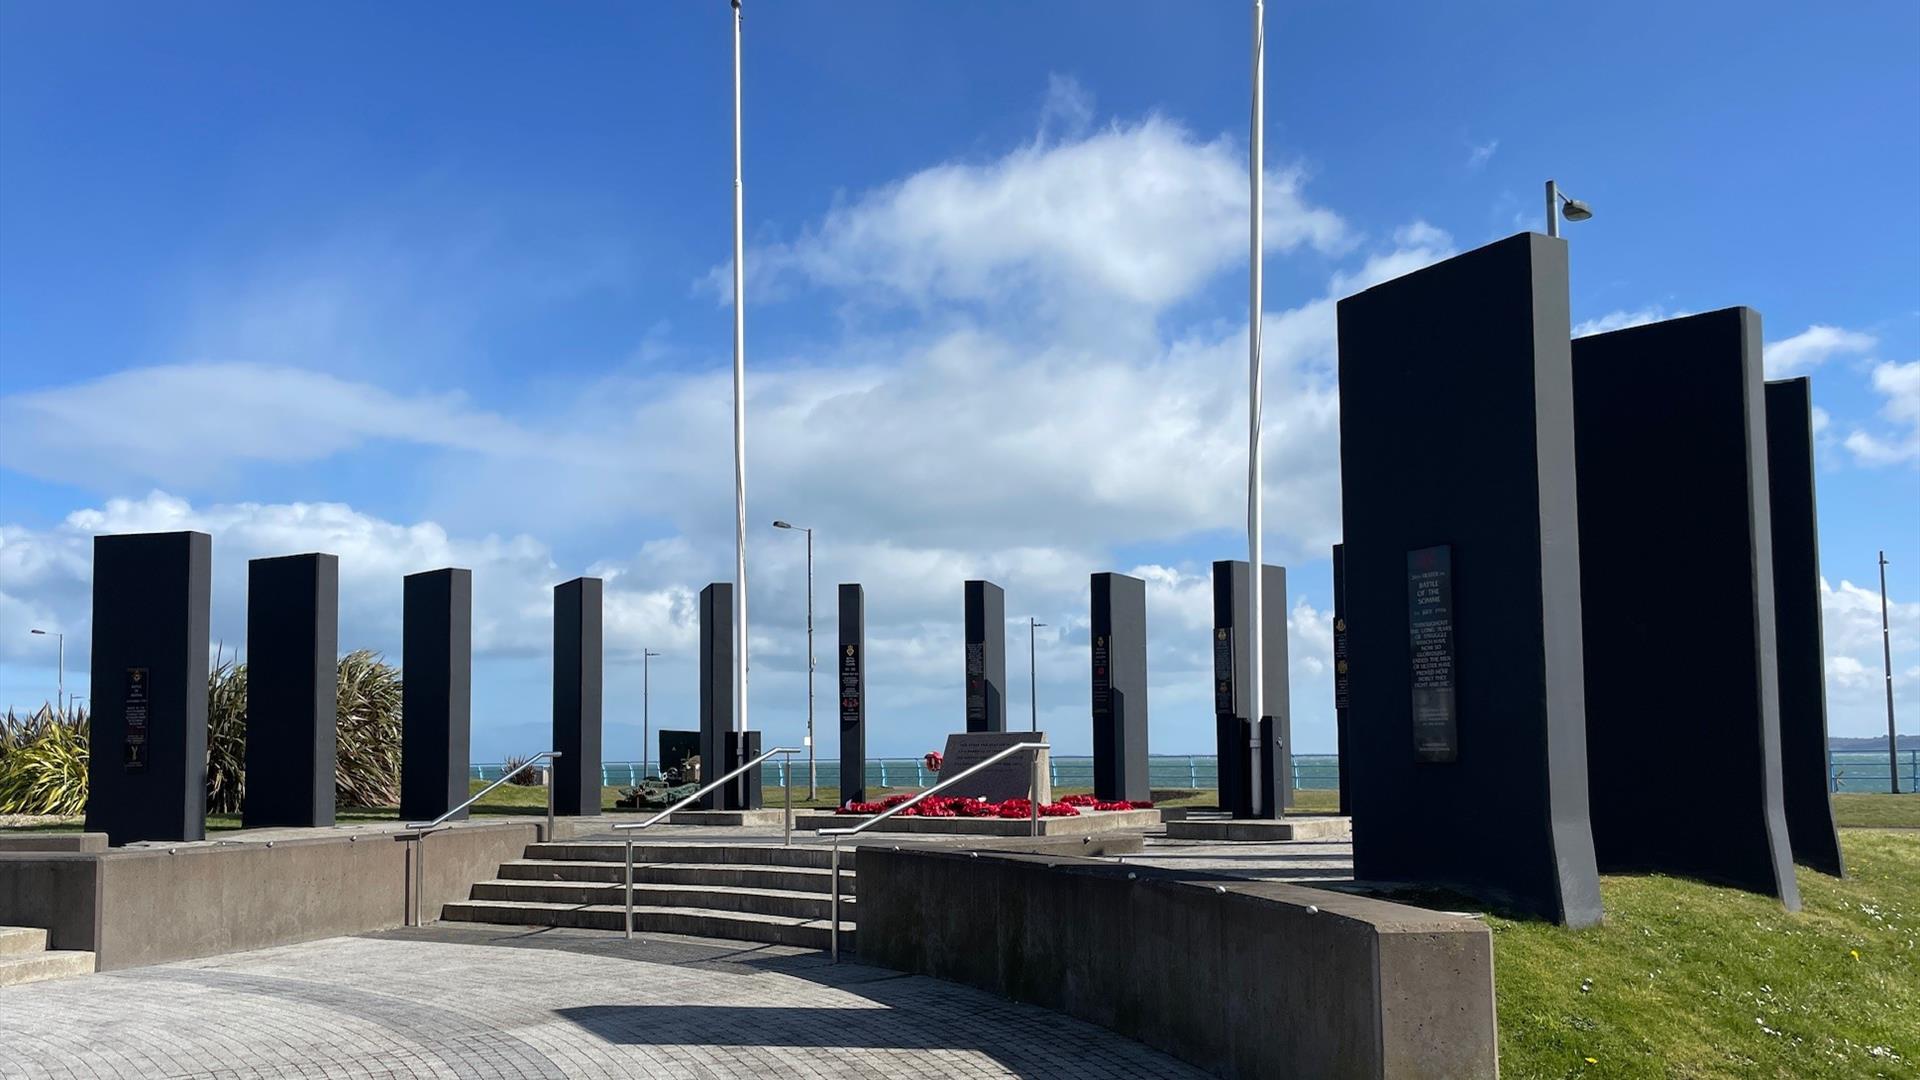 War Memorial Park at Marine Gardens in Carrickfergus